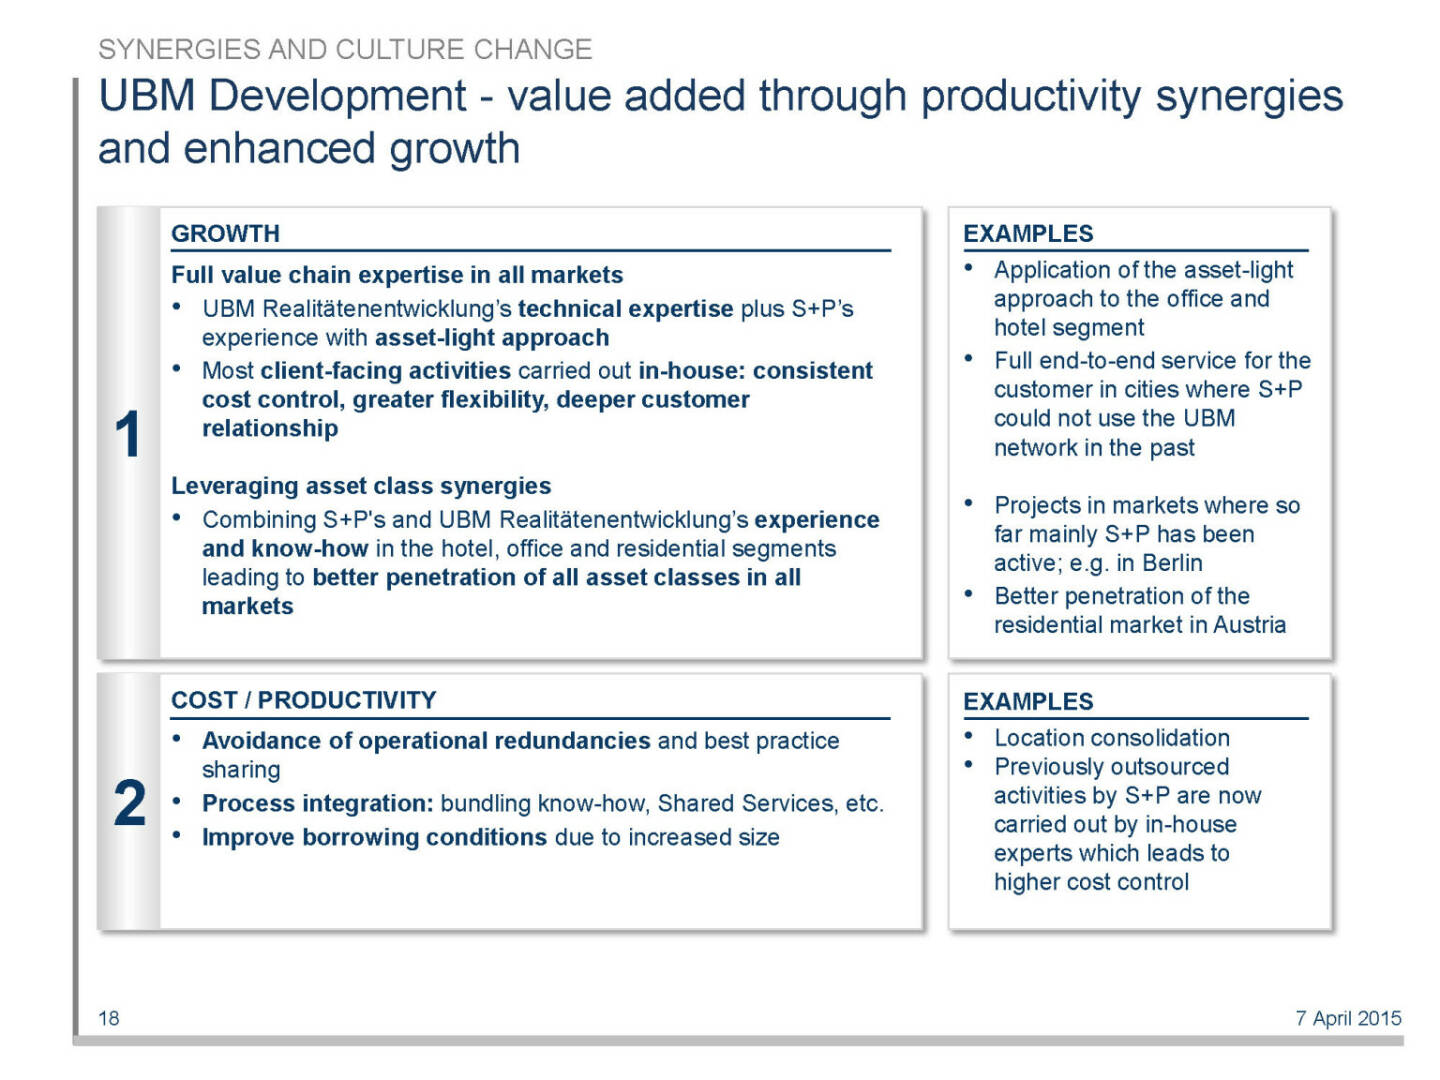 UBM Development - value added through productivity synergies and enhanced growth